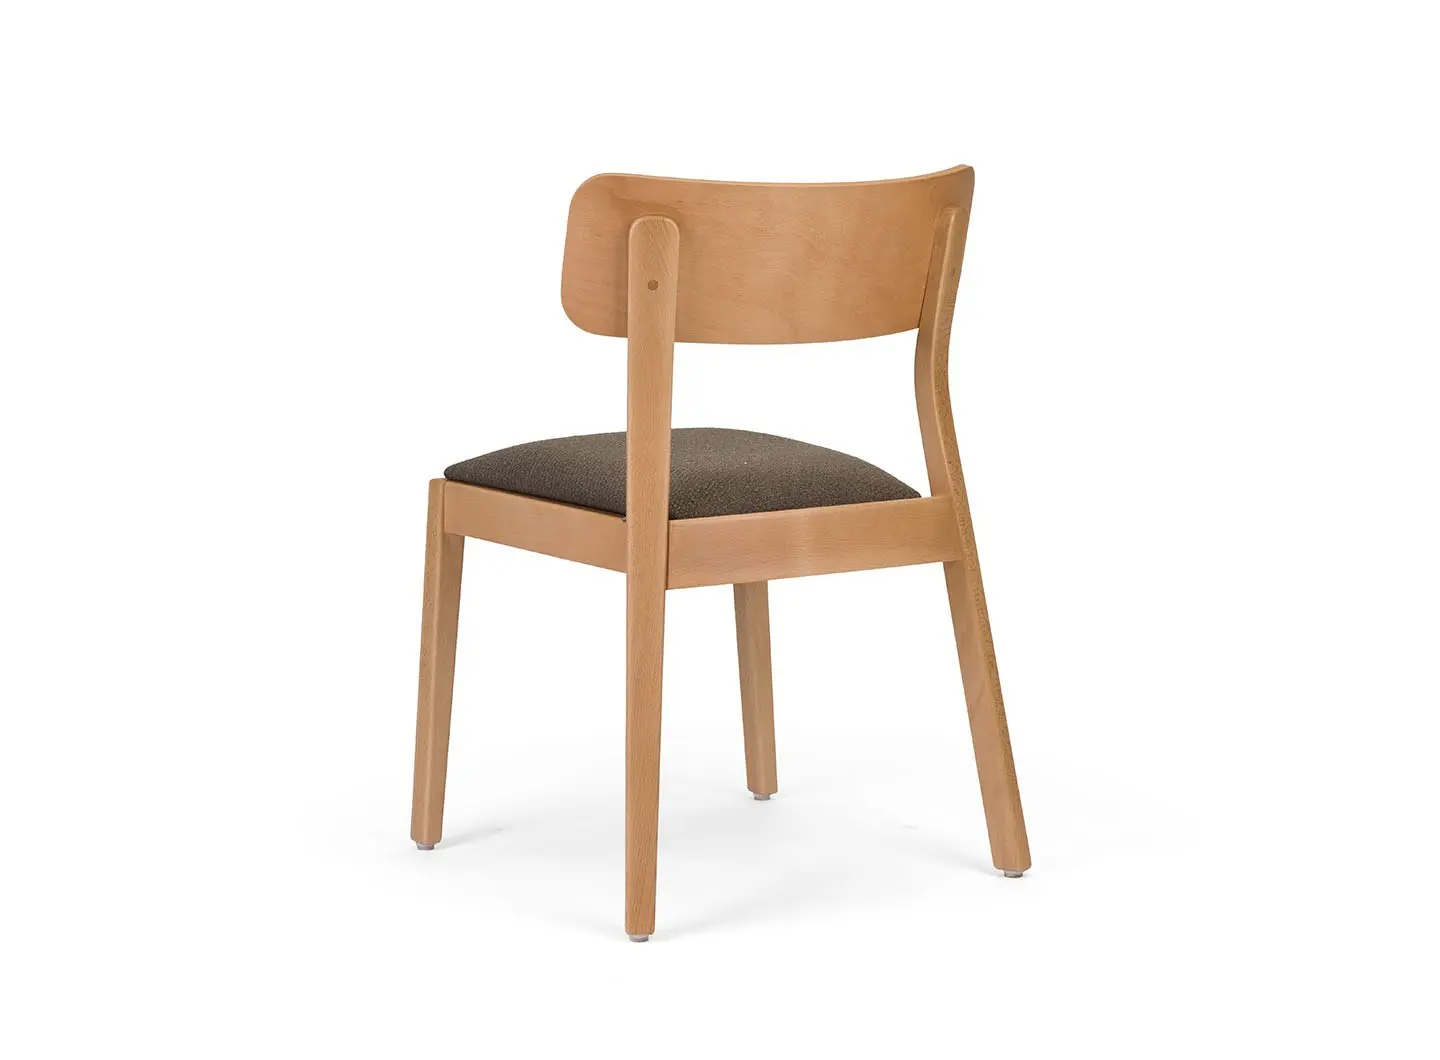 Suzanne chair by CarlesiTonelli Studio